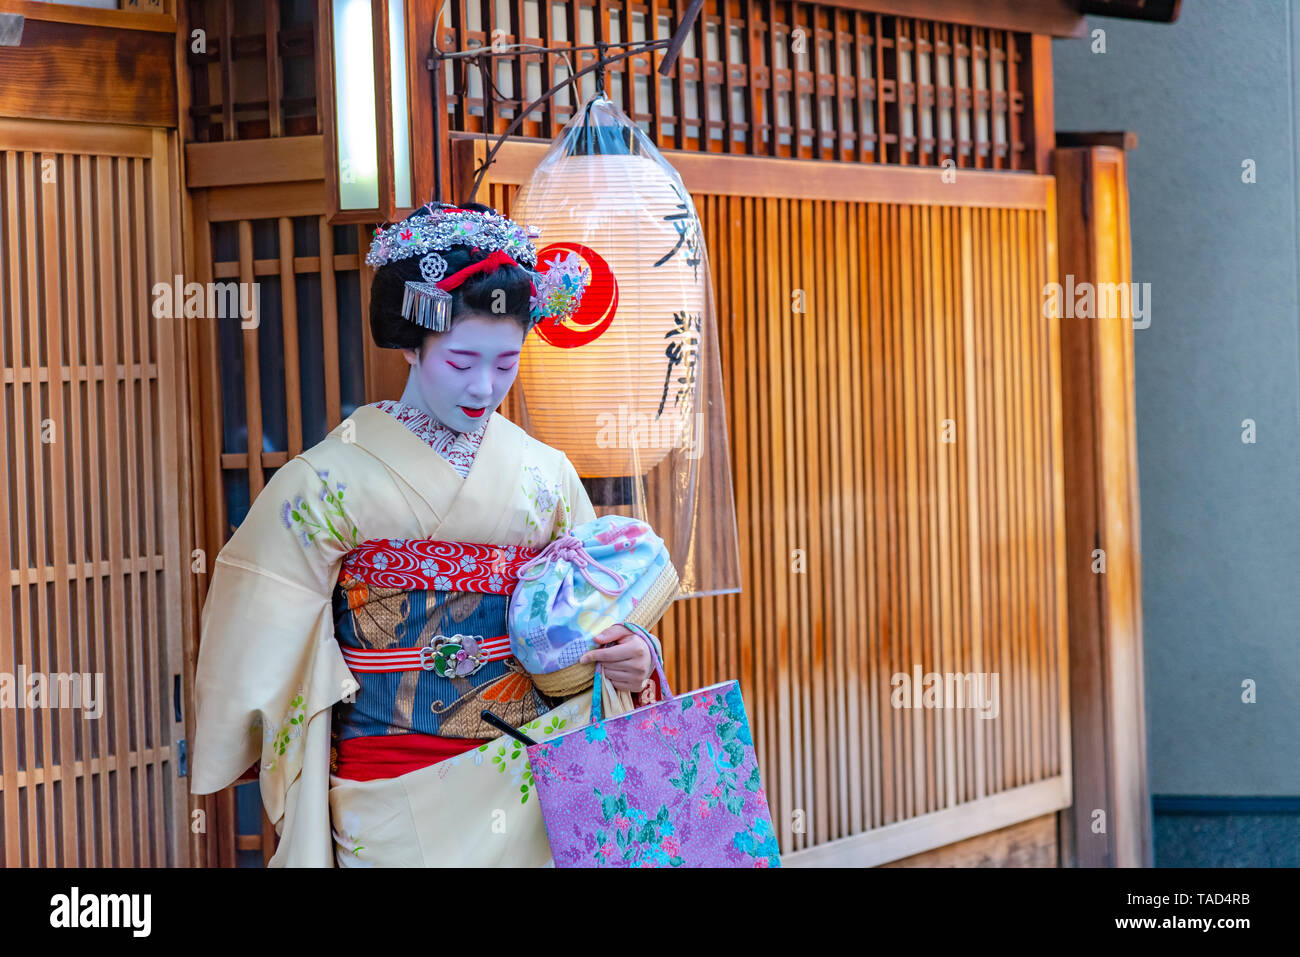 Geisha wearing traditional dress (kimono) leaving a tea house. Geisha are traditional female Japanese entertainers. Stock Photo